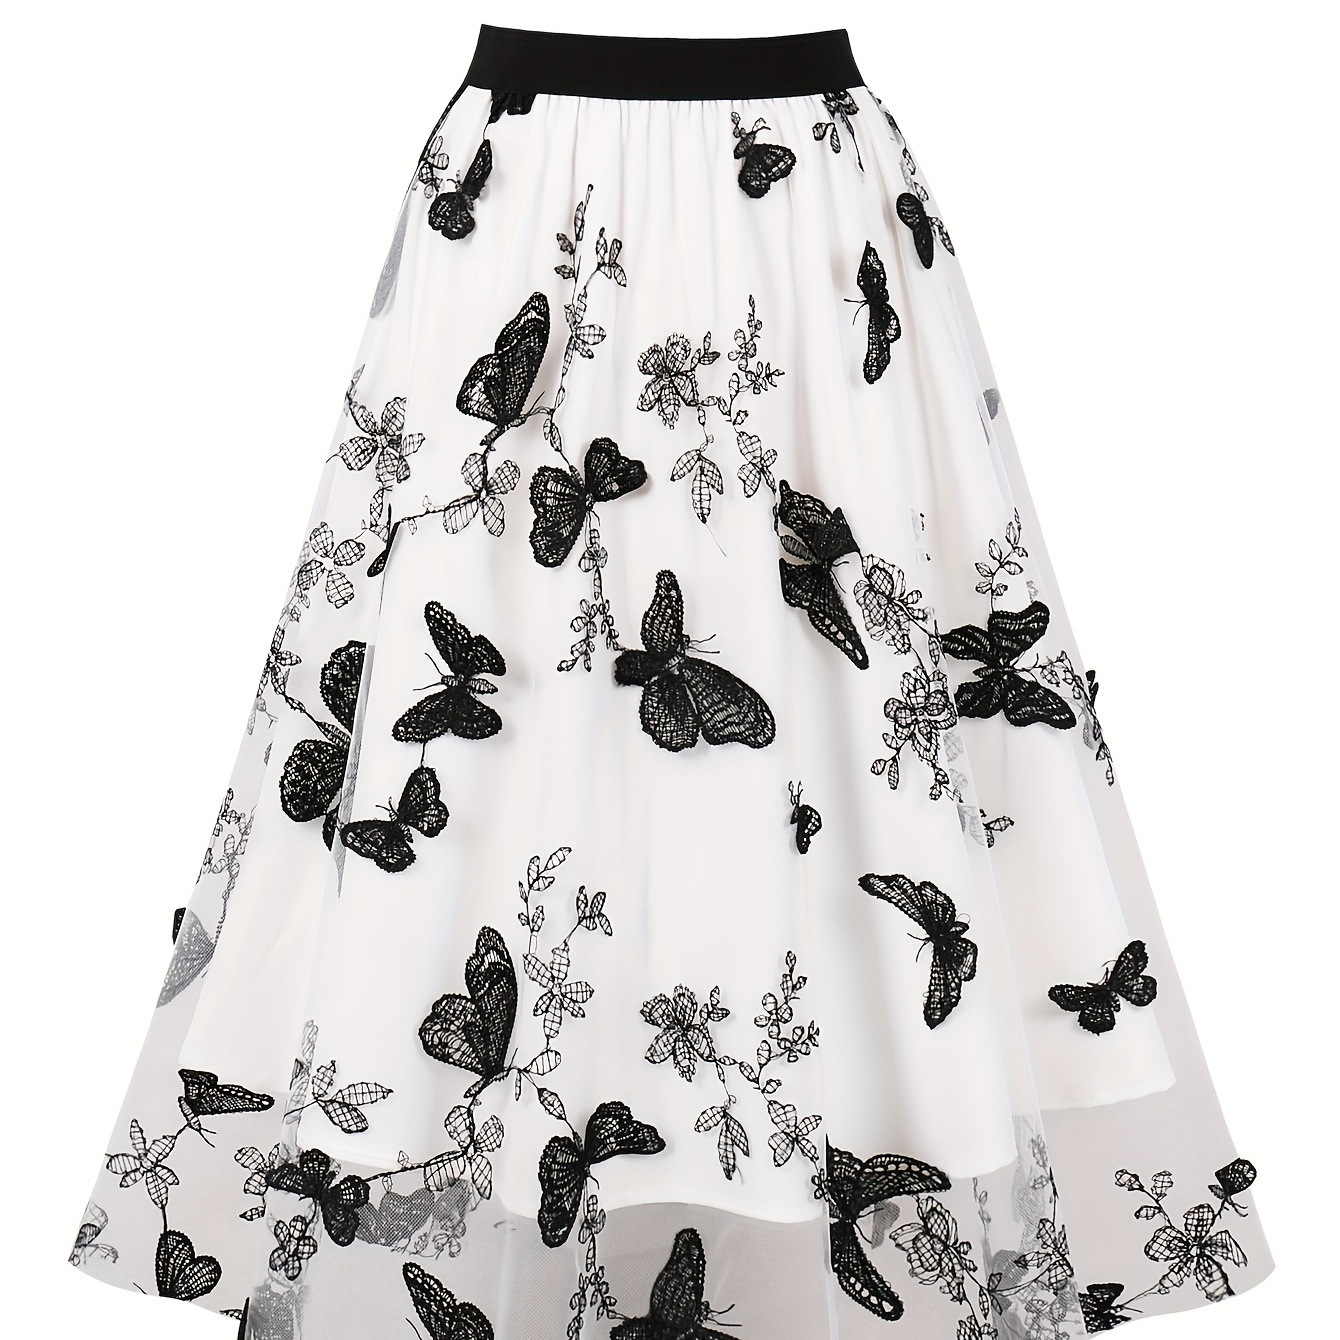 

Butterfly Embroidered Mesh Overlay Skirt, Elegant High Waist A-line Swing Skirt, Women's Clothing